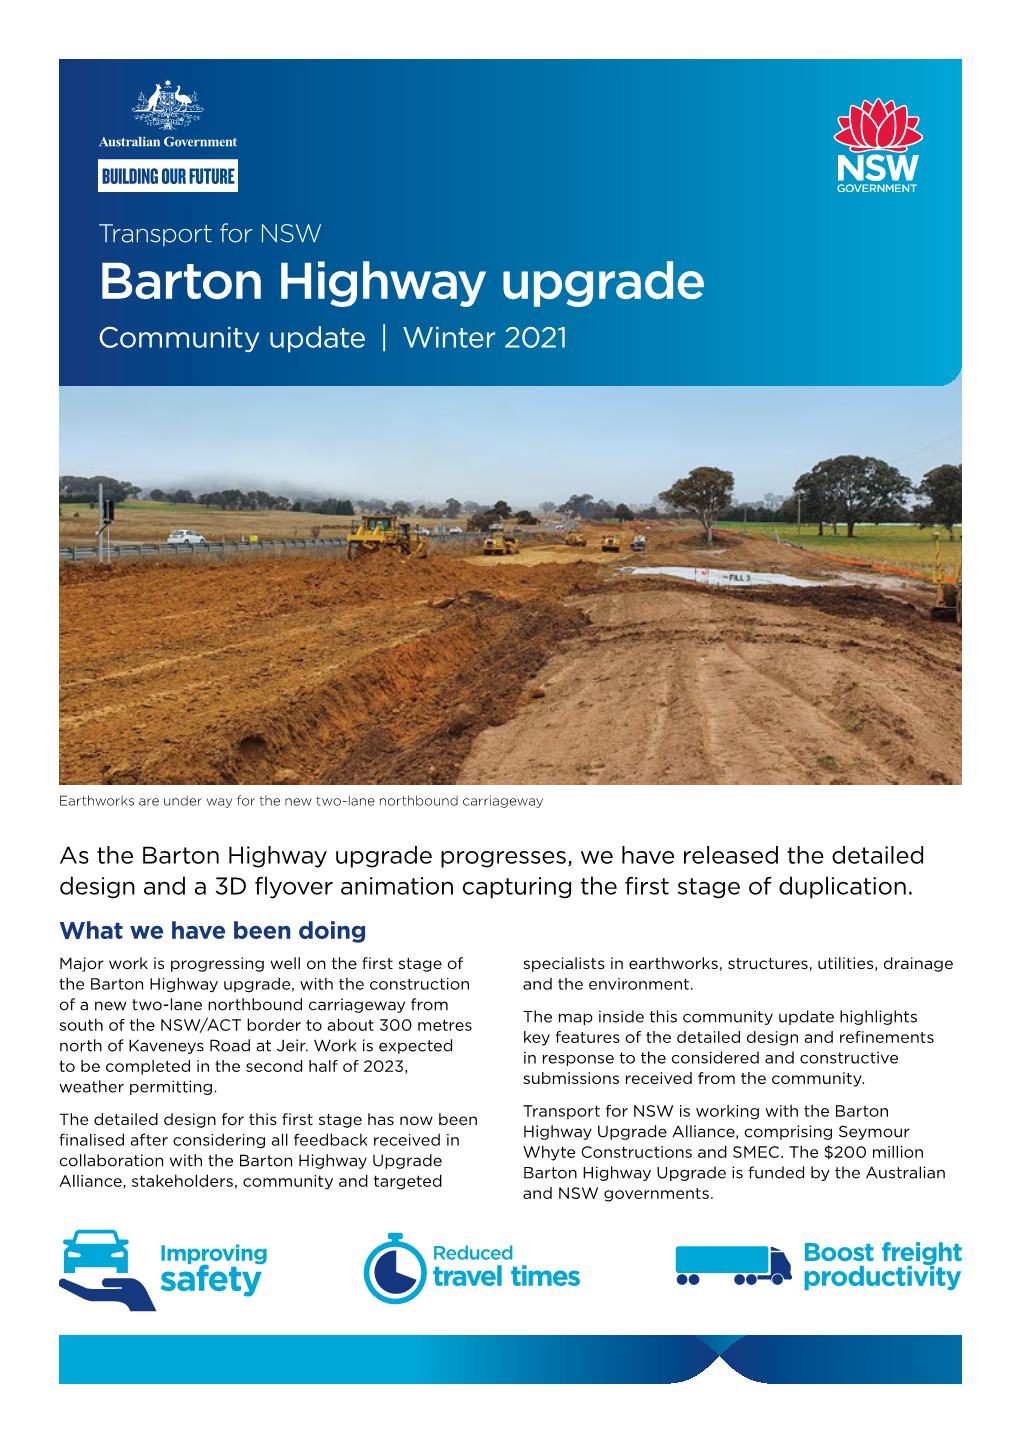 Barton Highway Upgrade Community Update | Winter 2021